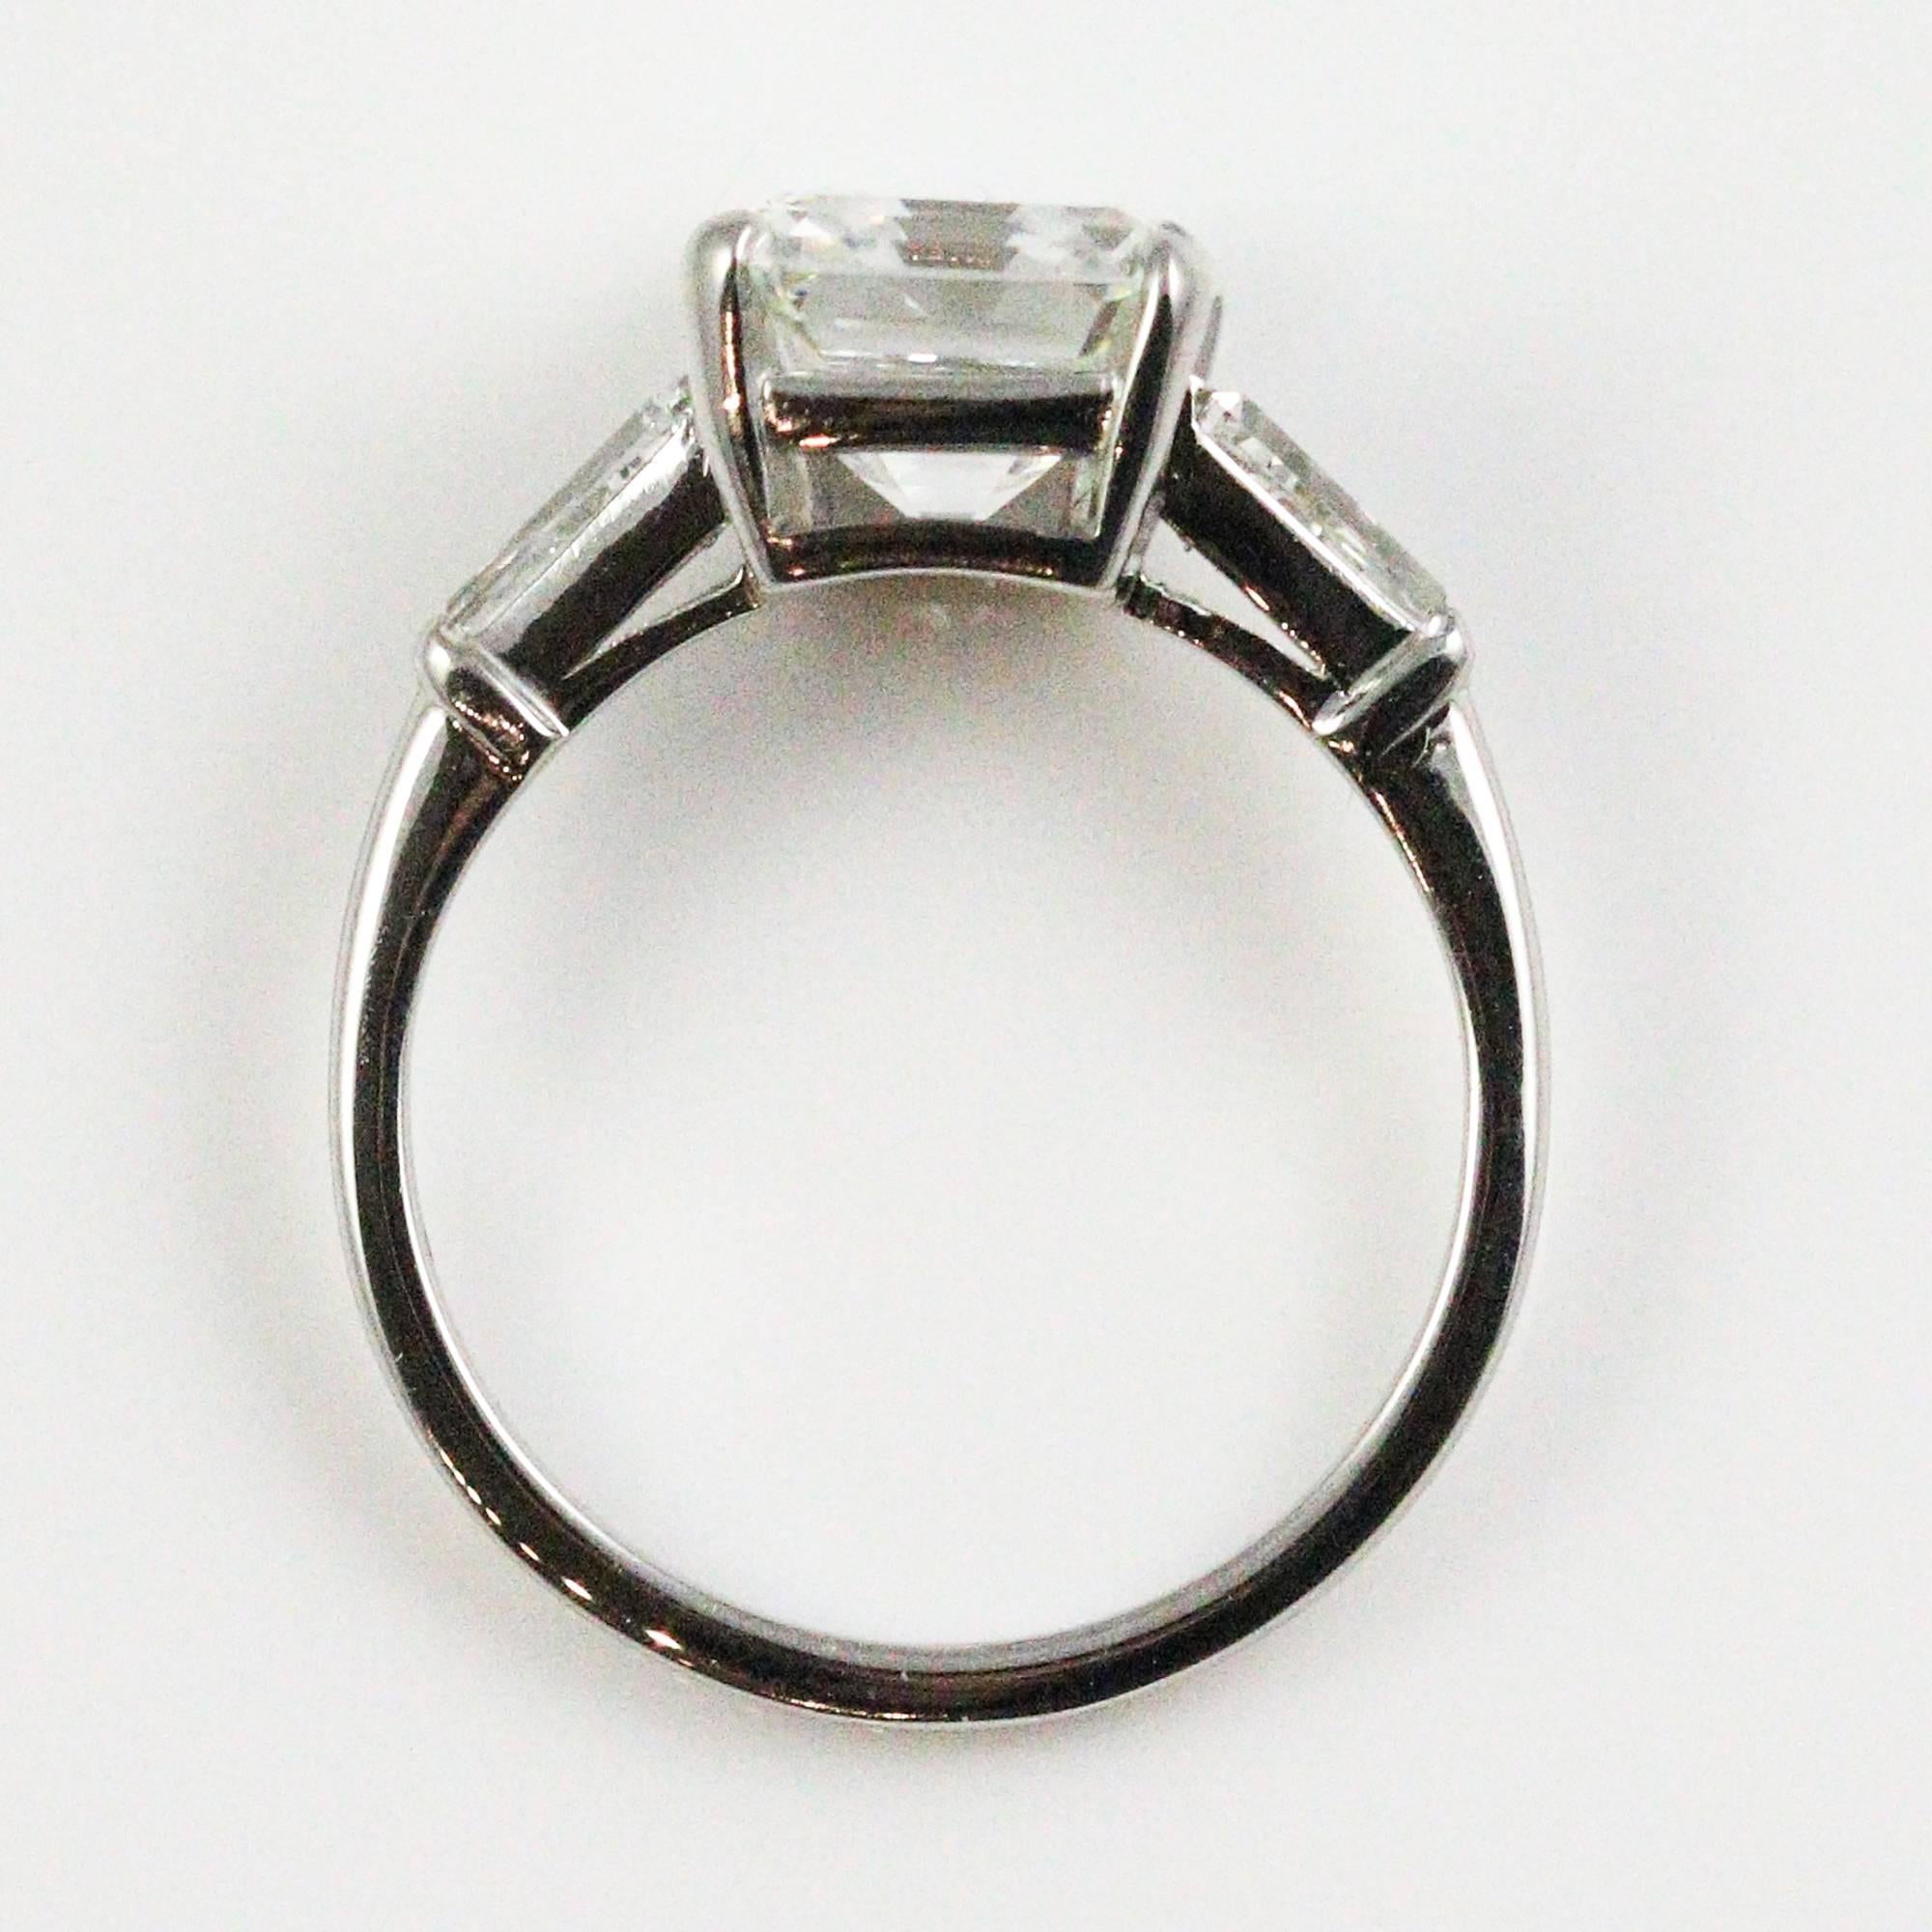 Modern Magnificent 3.87 Carat GIA Certified Emerald Cut Diamond Ring